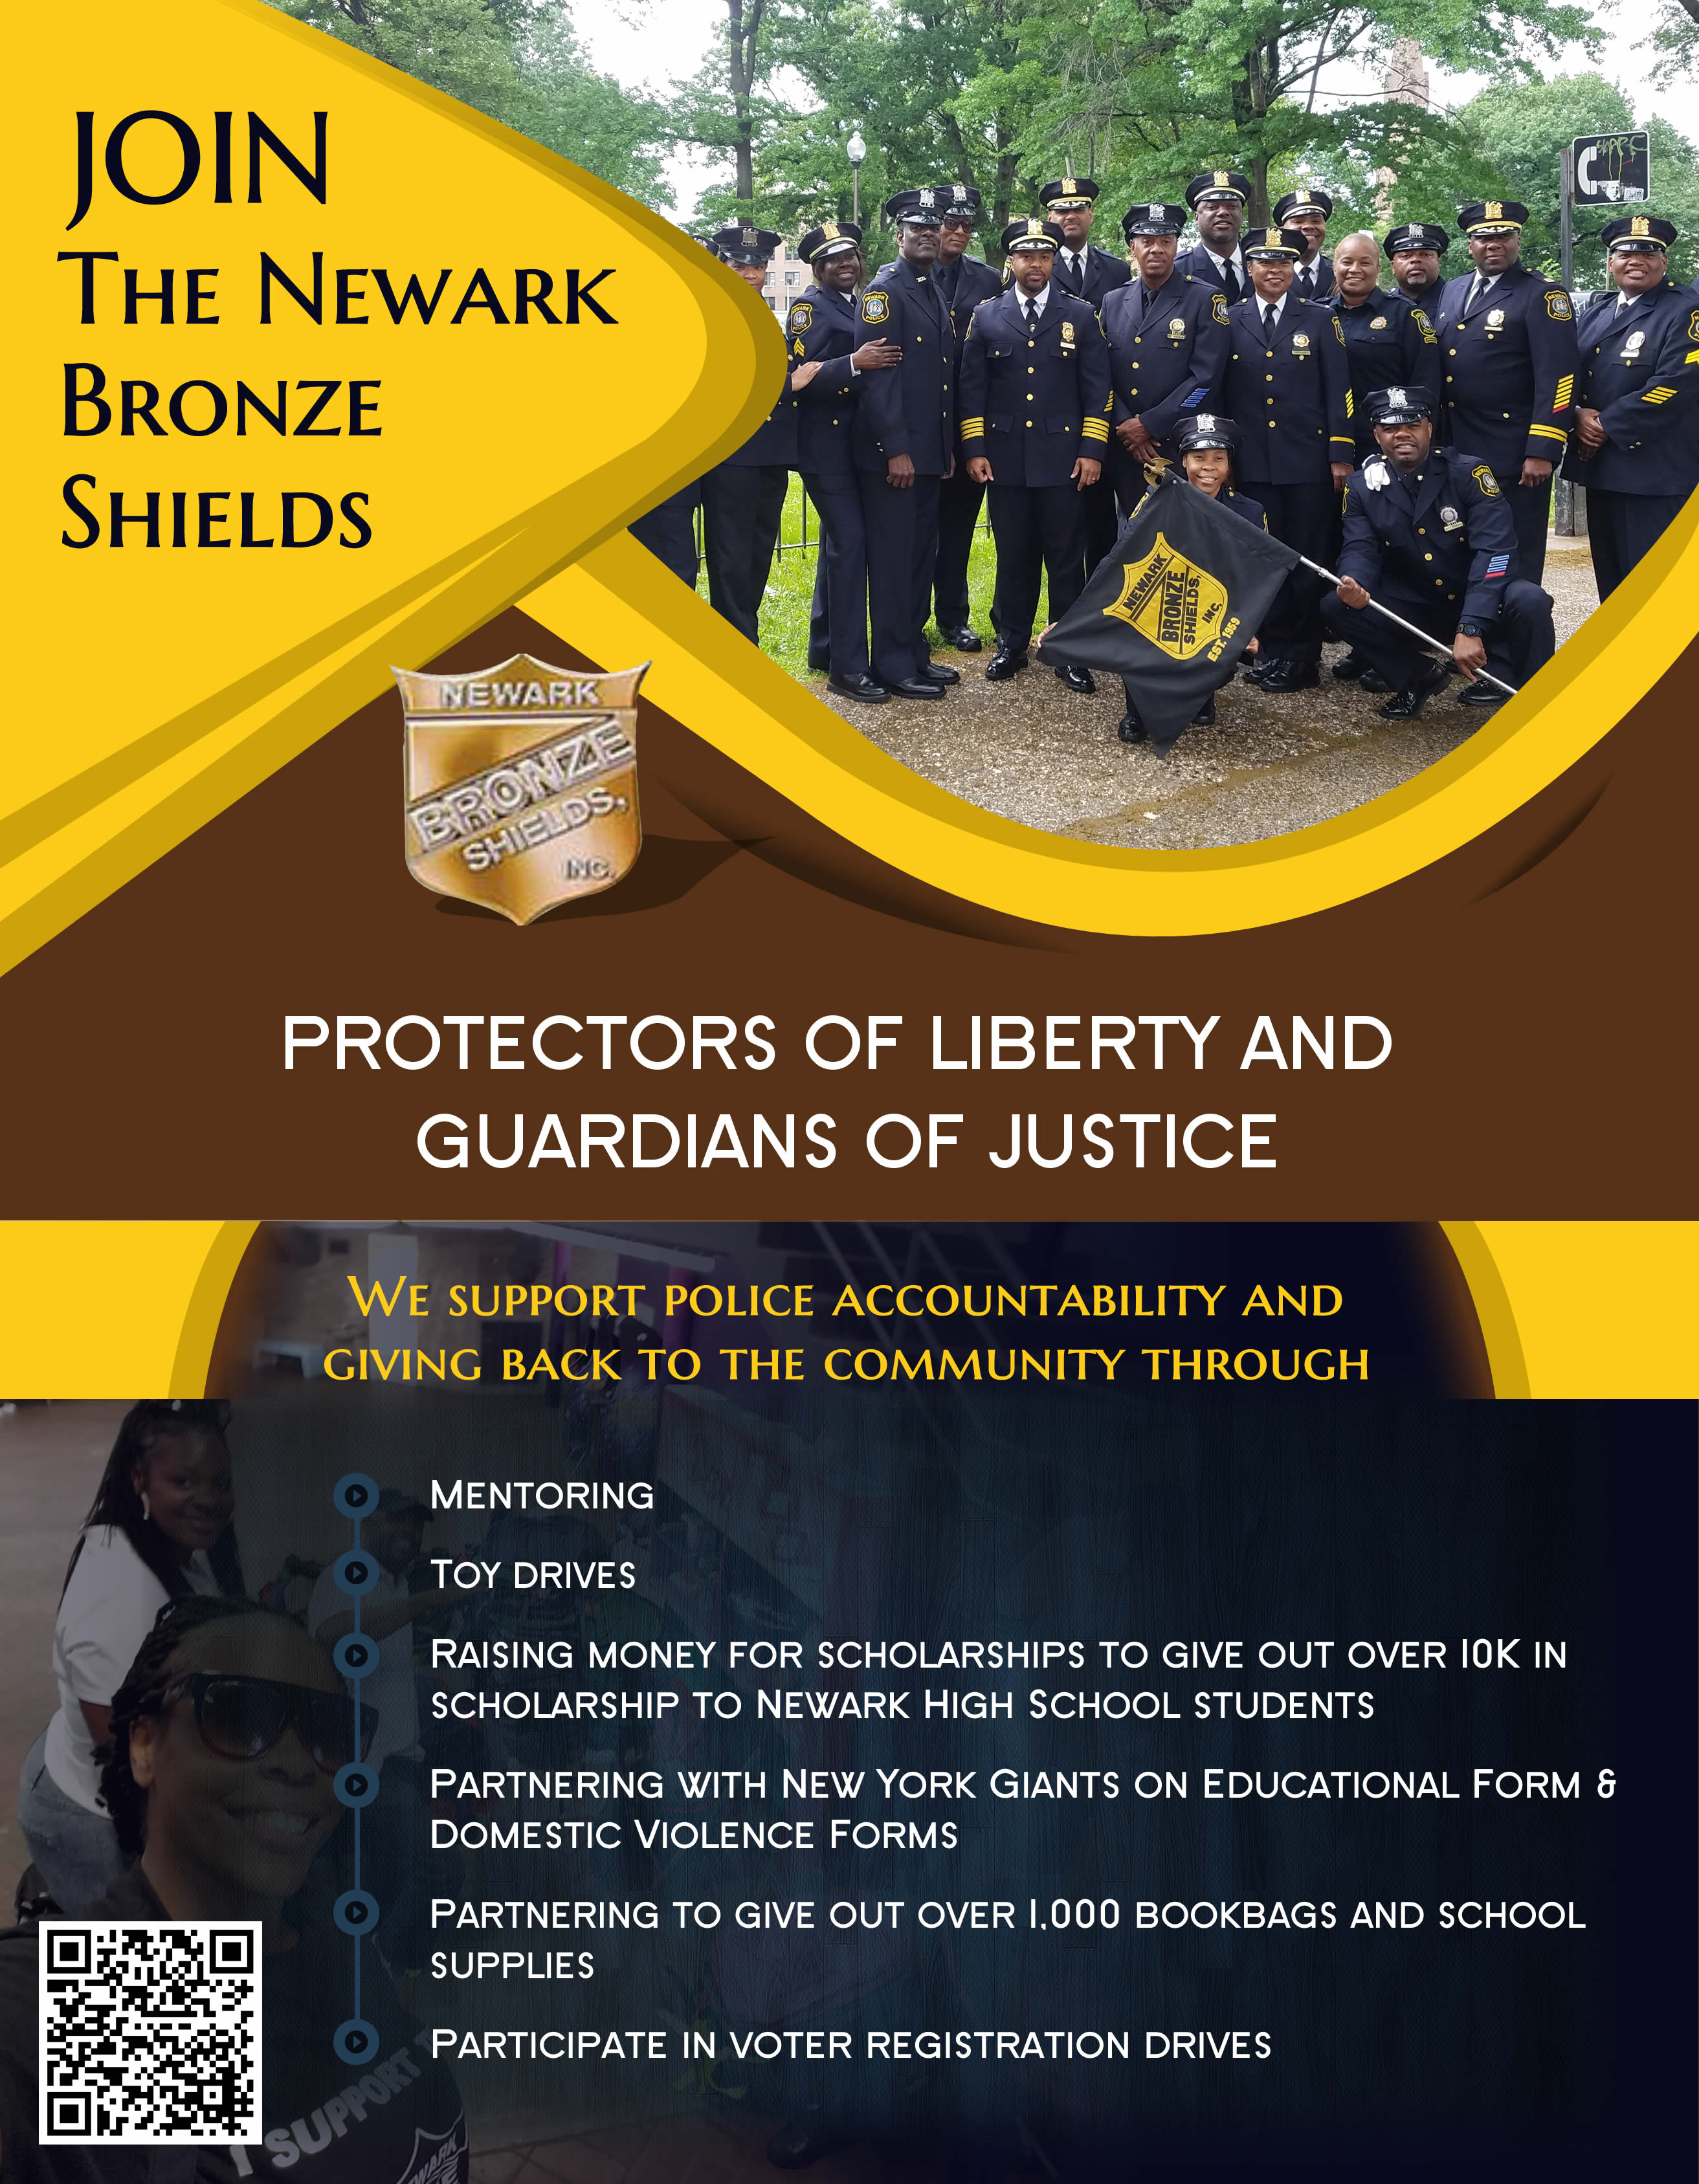 Download "Join the Newark Bronze Shields" Flyer